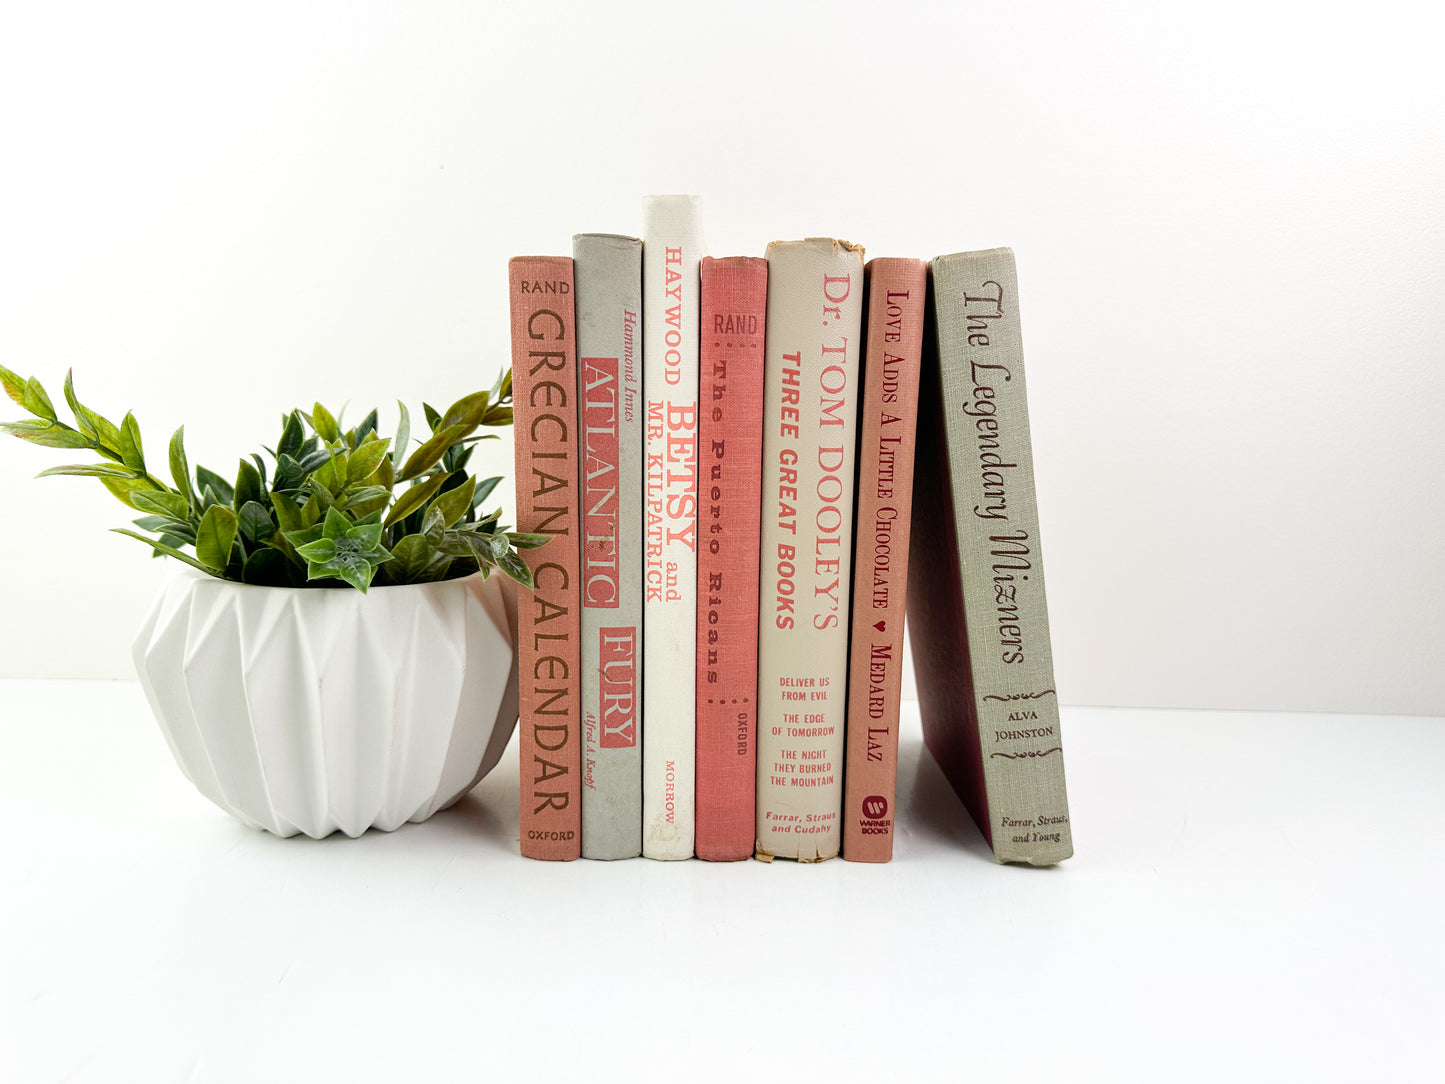 Pink Decorative Books for Shelf Decor